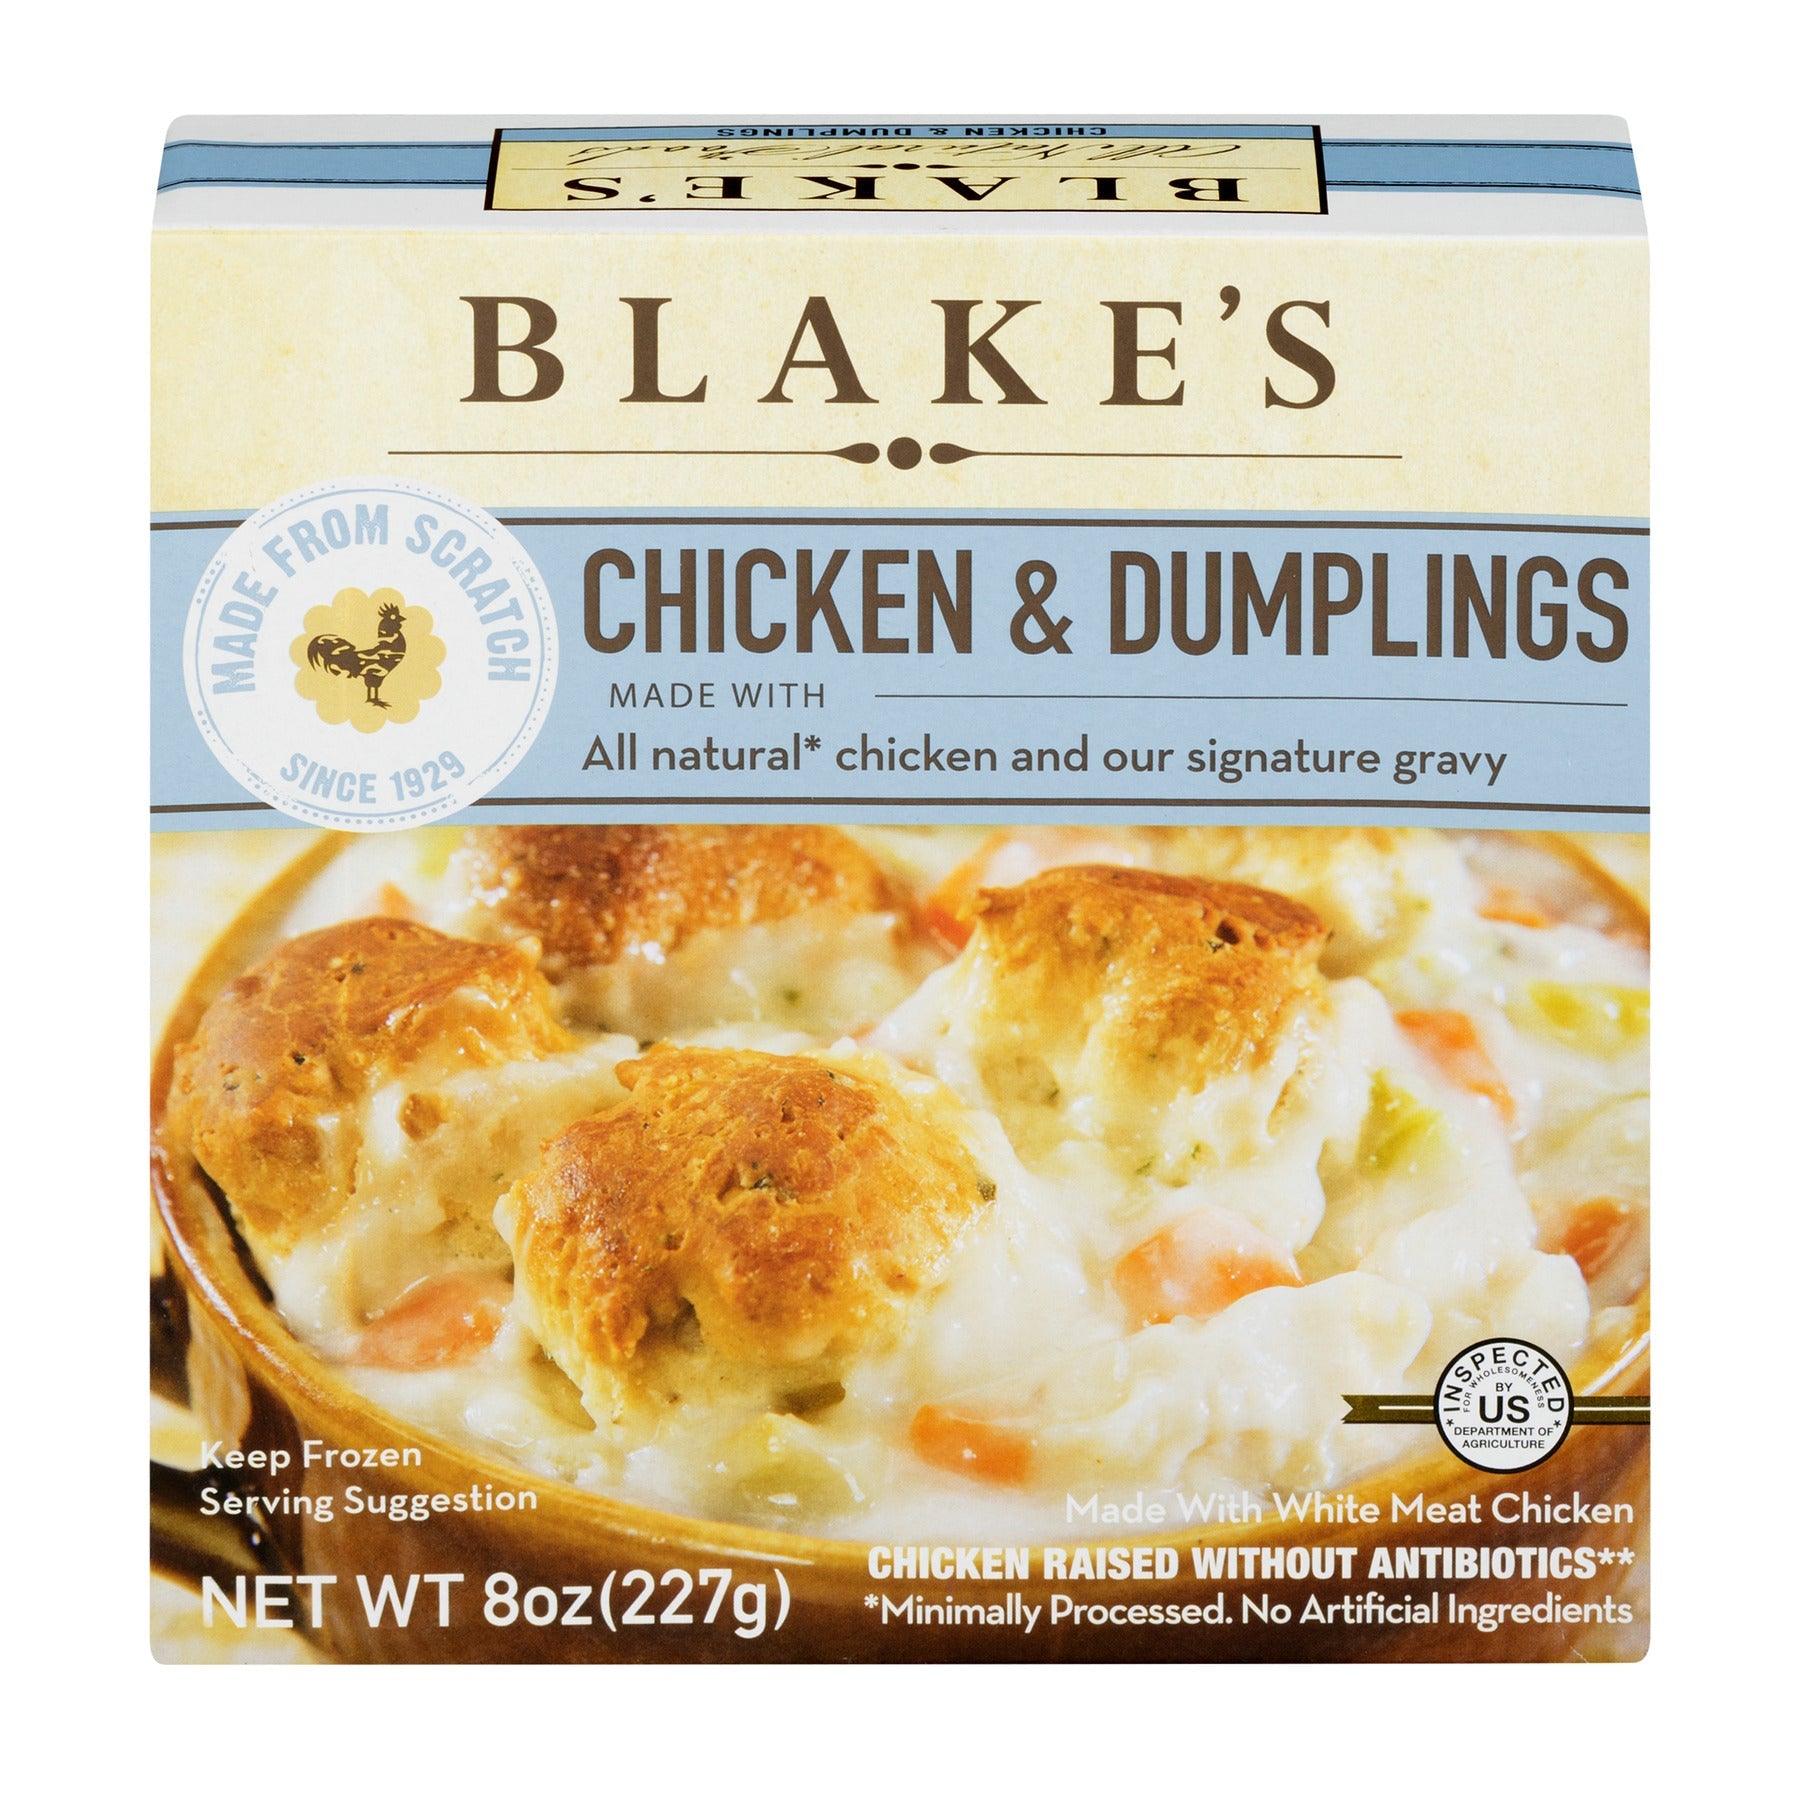 Blakes Chicken & Dumplings Box